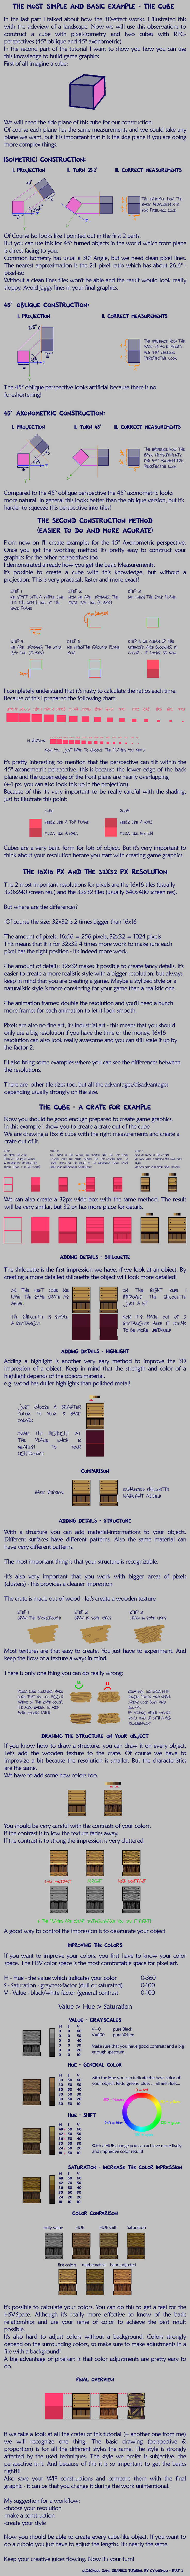 Pixel Art Tutorial 3 - The 'perfect' crate